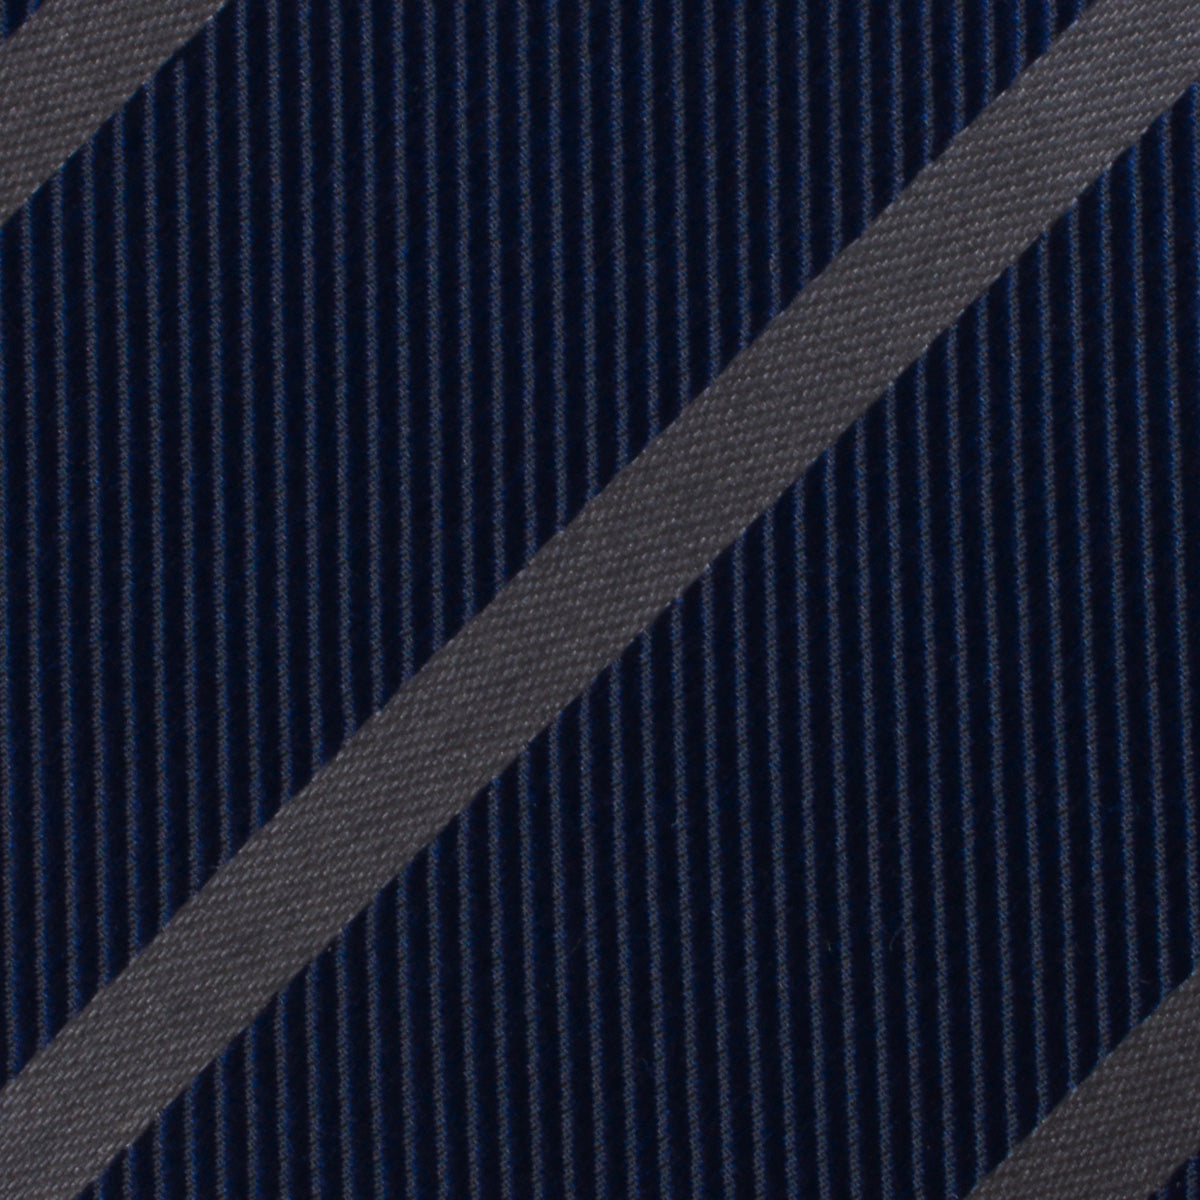 Charcoal Grey Striped Necktie Fabric